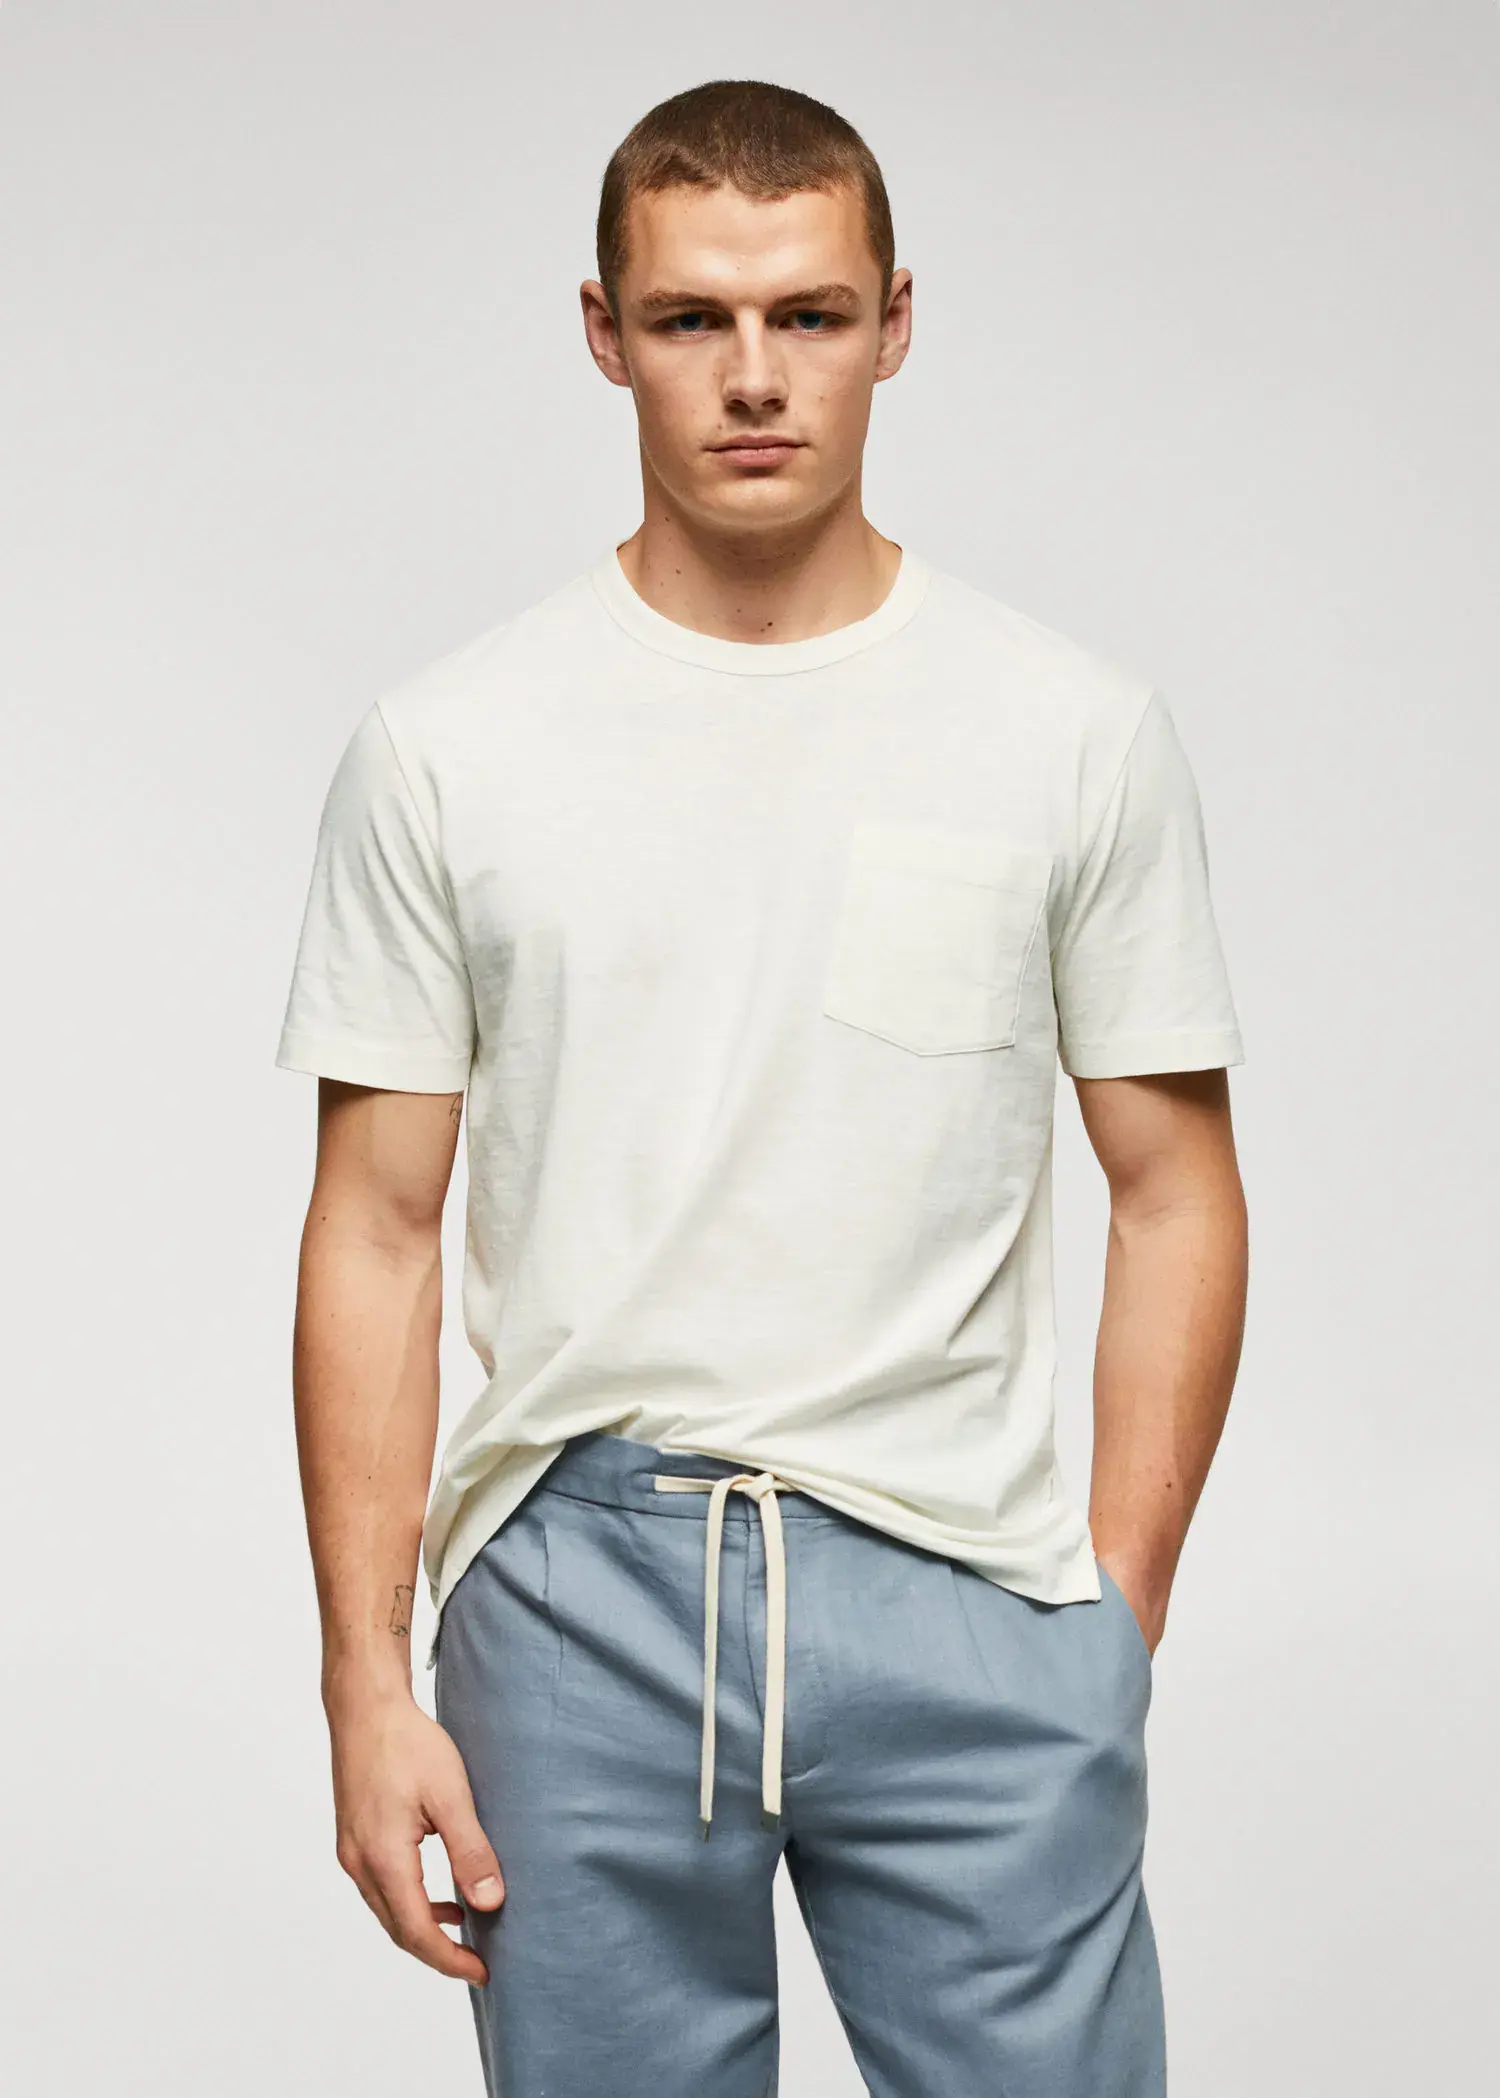 Mango 100% cotton t-shirt with pocket. a young man wearing a white t-shirt. 